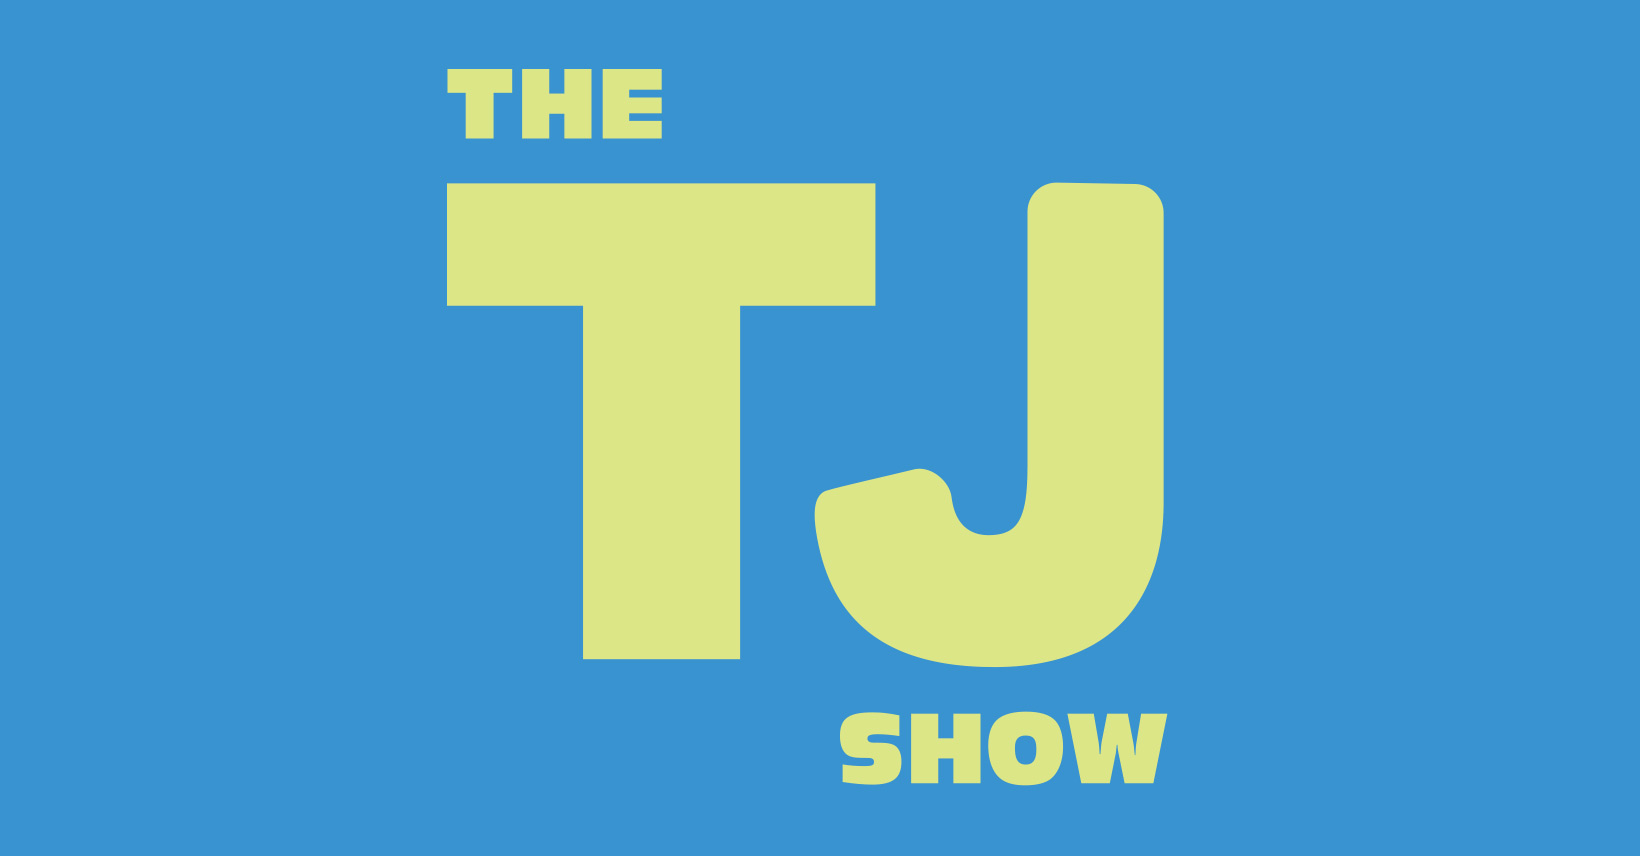 The TJ Show